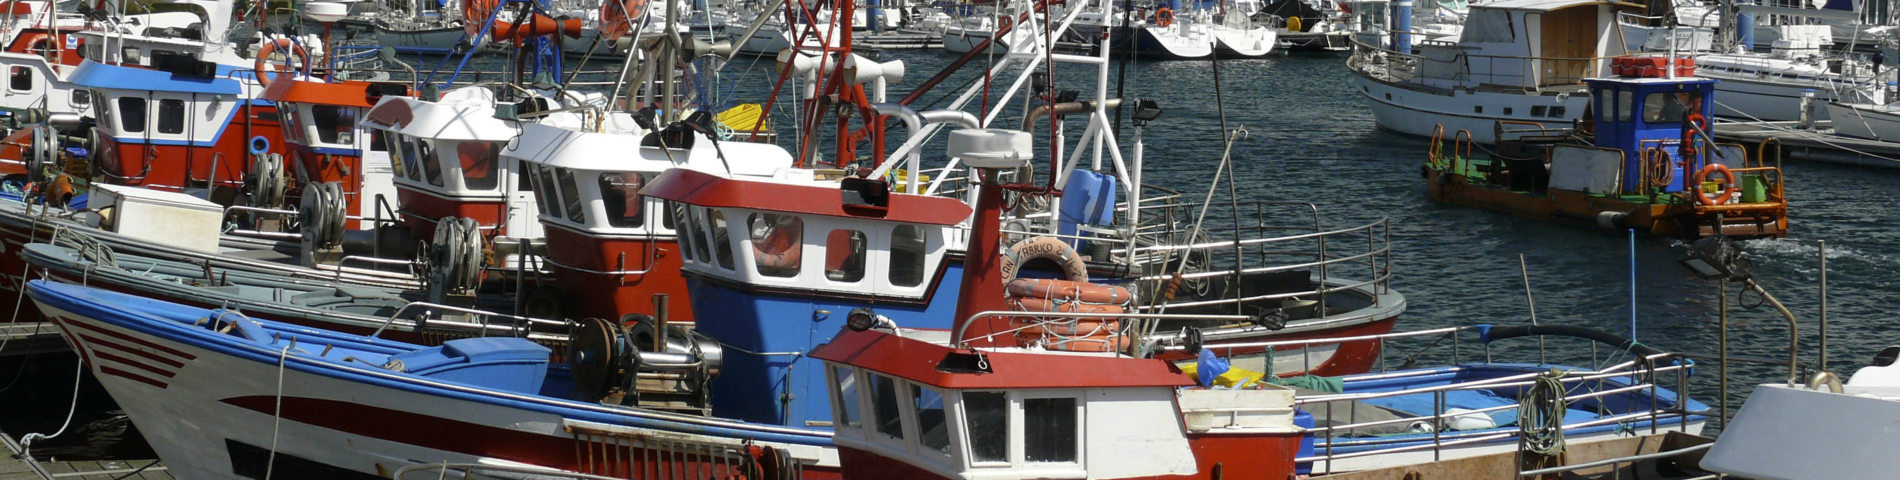 Galicia Auténtica - Nautical Charter, Golf...